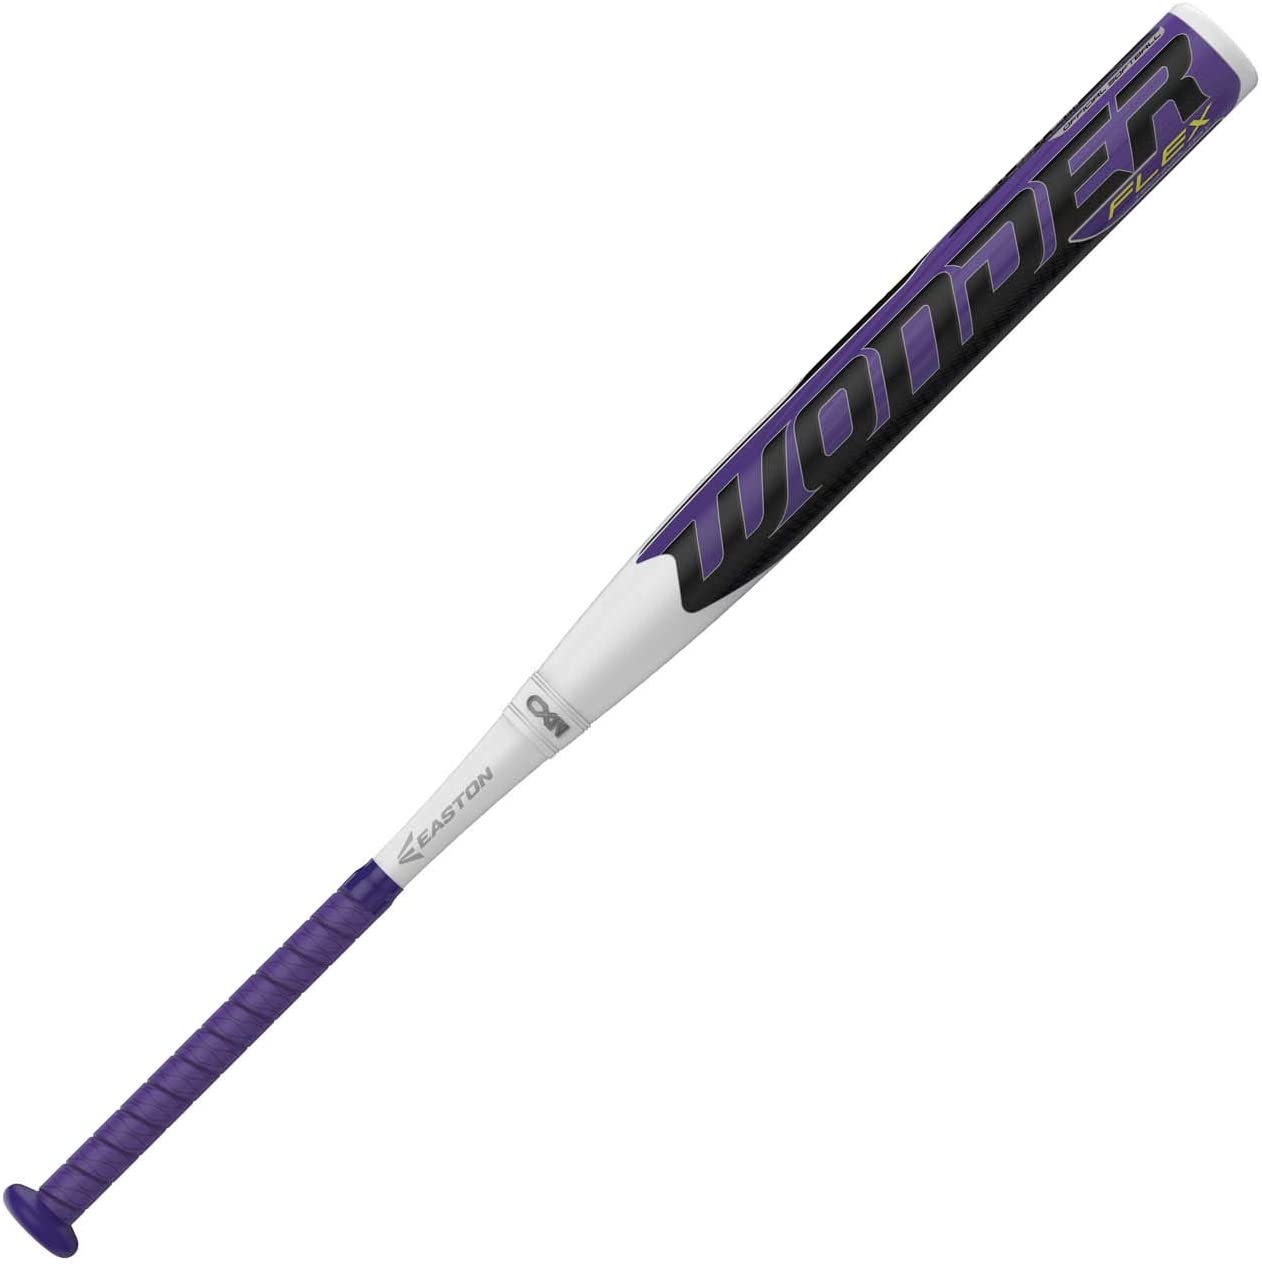 9. EASTON Wonder Fastpitch Softball Bat